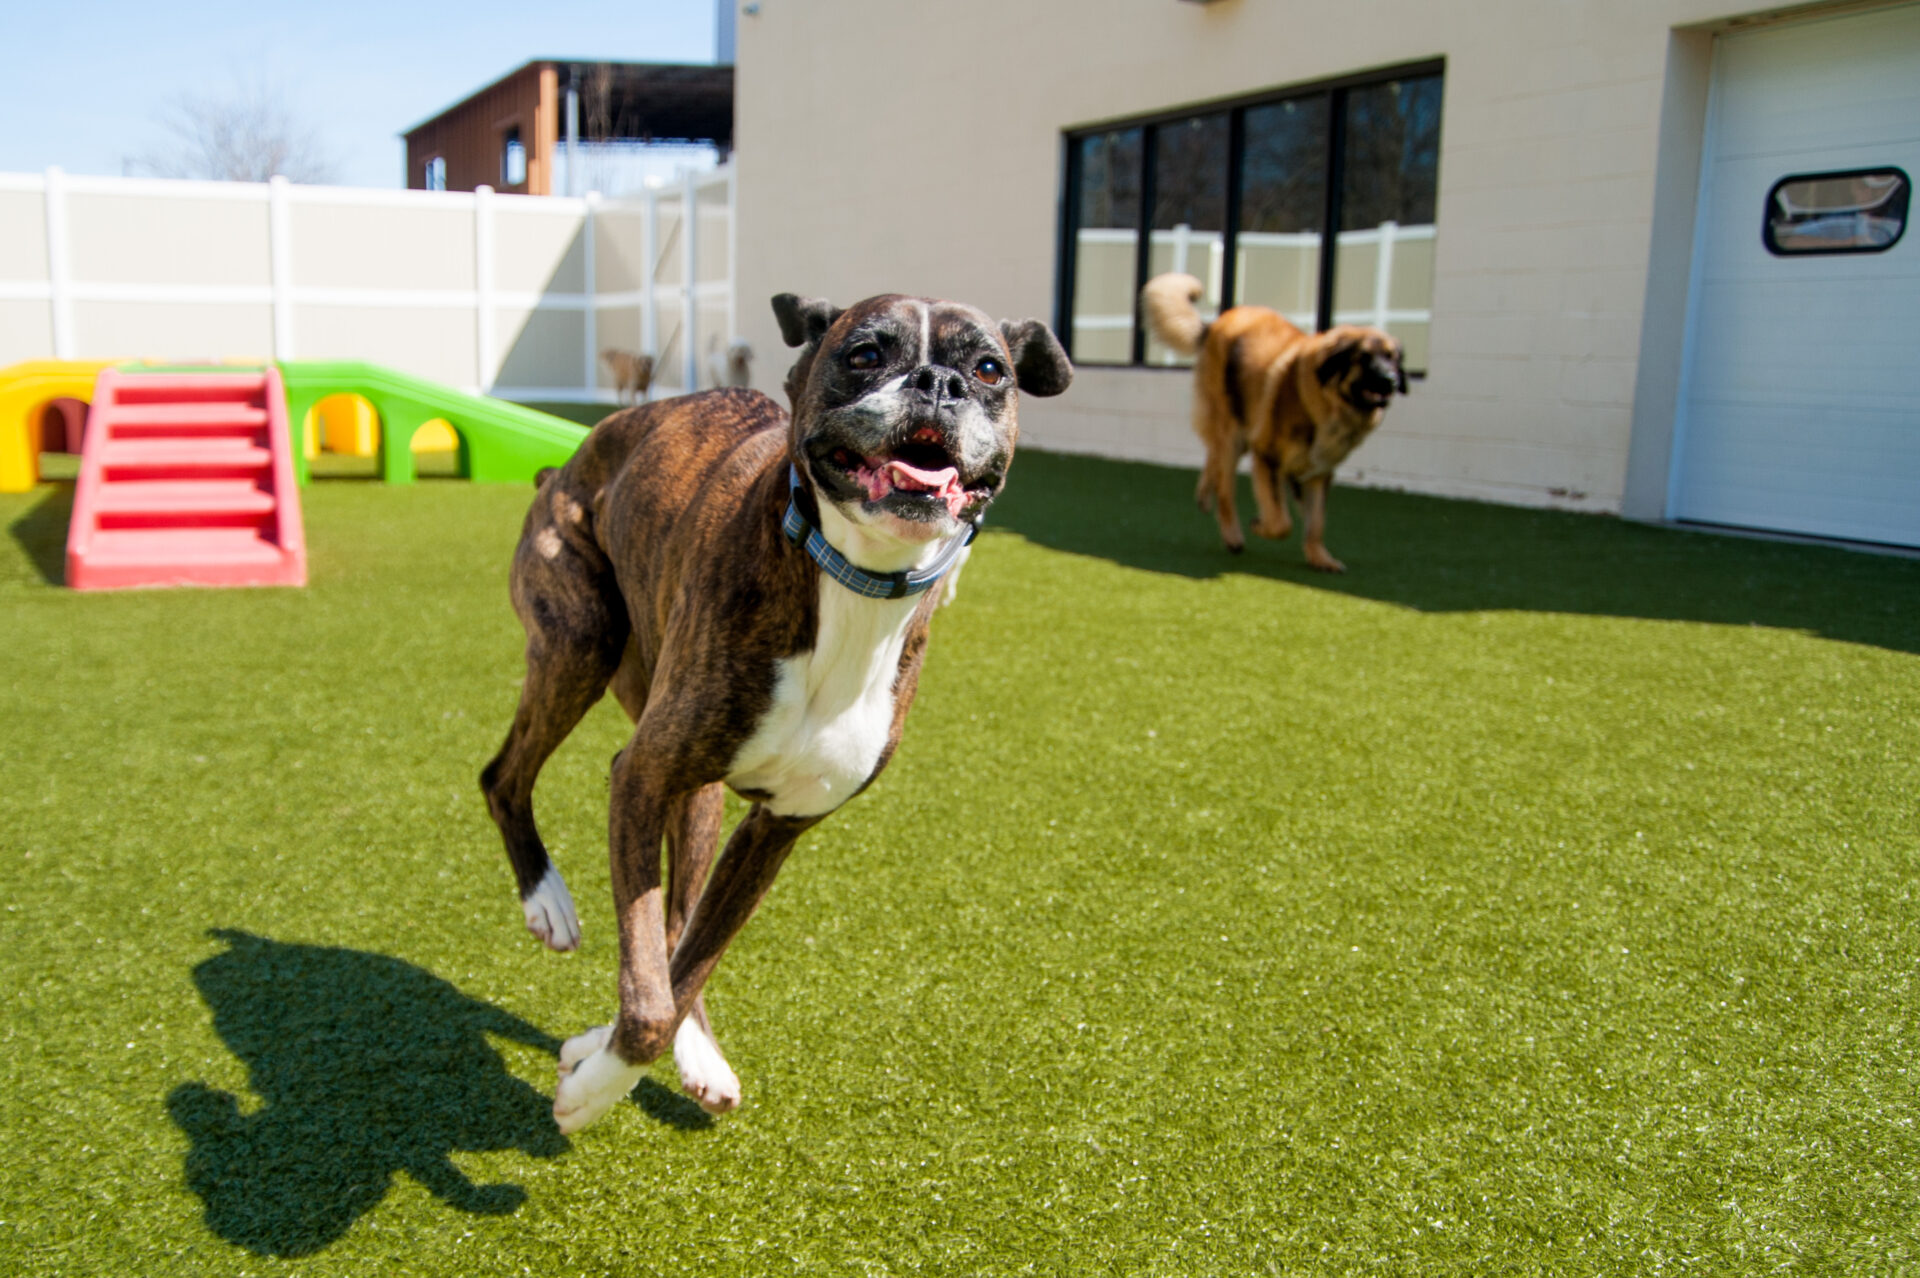 Dog happily running on grass